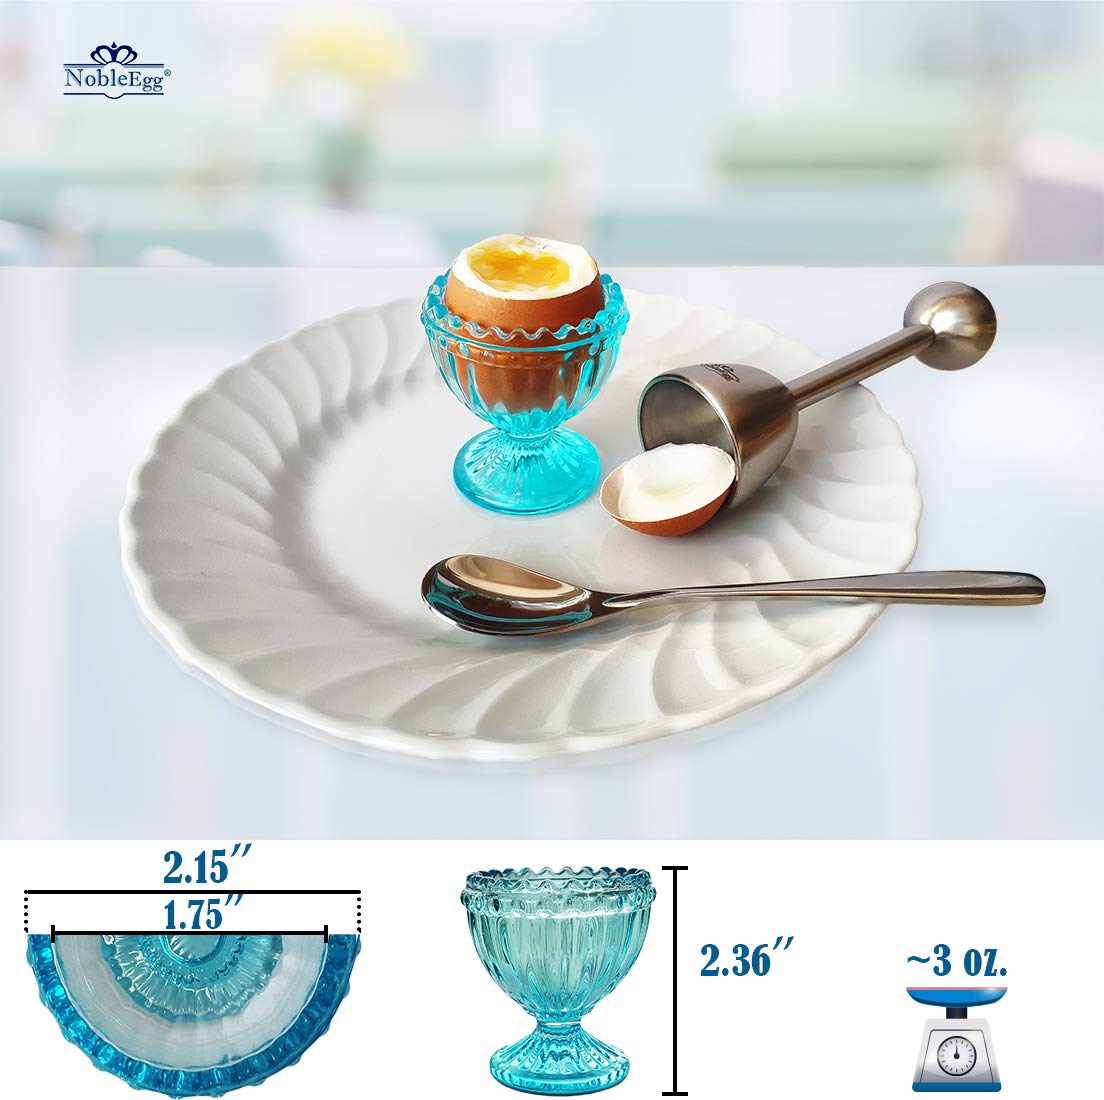 NobleEgg Antique Style Egg Cups for Soft Boiled Eggs | Set of 4 | Egg Timer Pro | 18/10 Egg Spoons | Egg Topper | Premium Gift/Storage Box